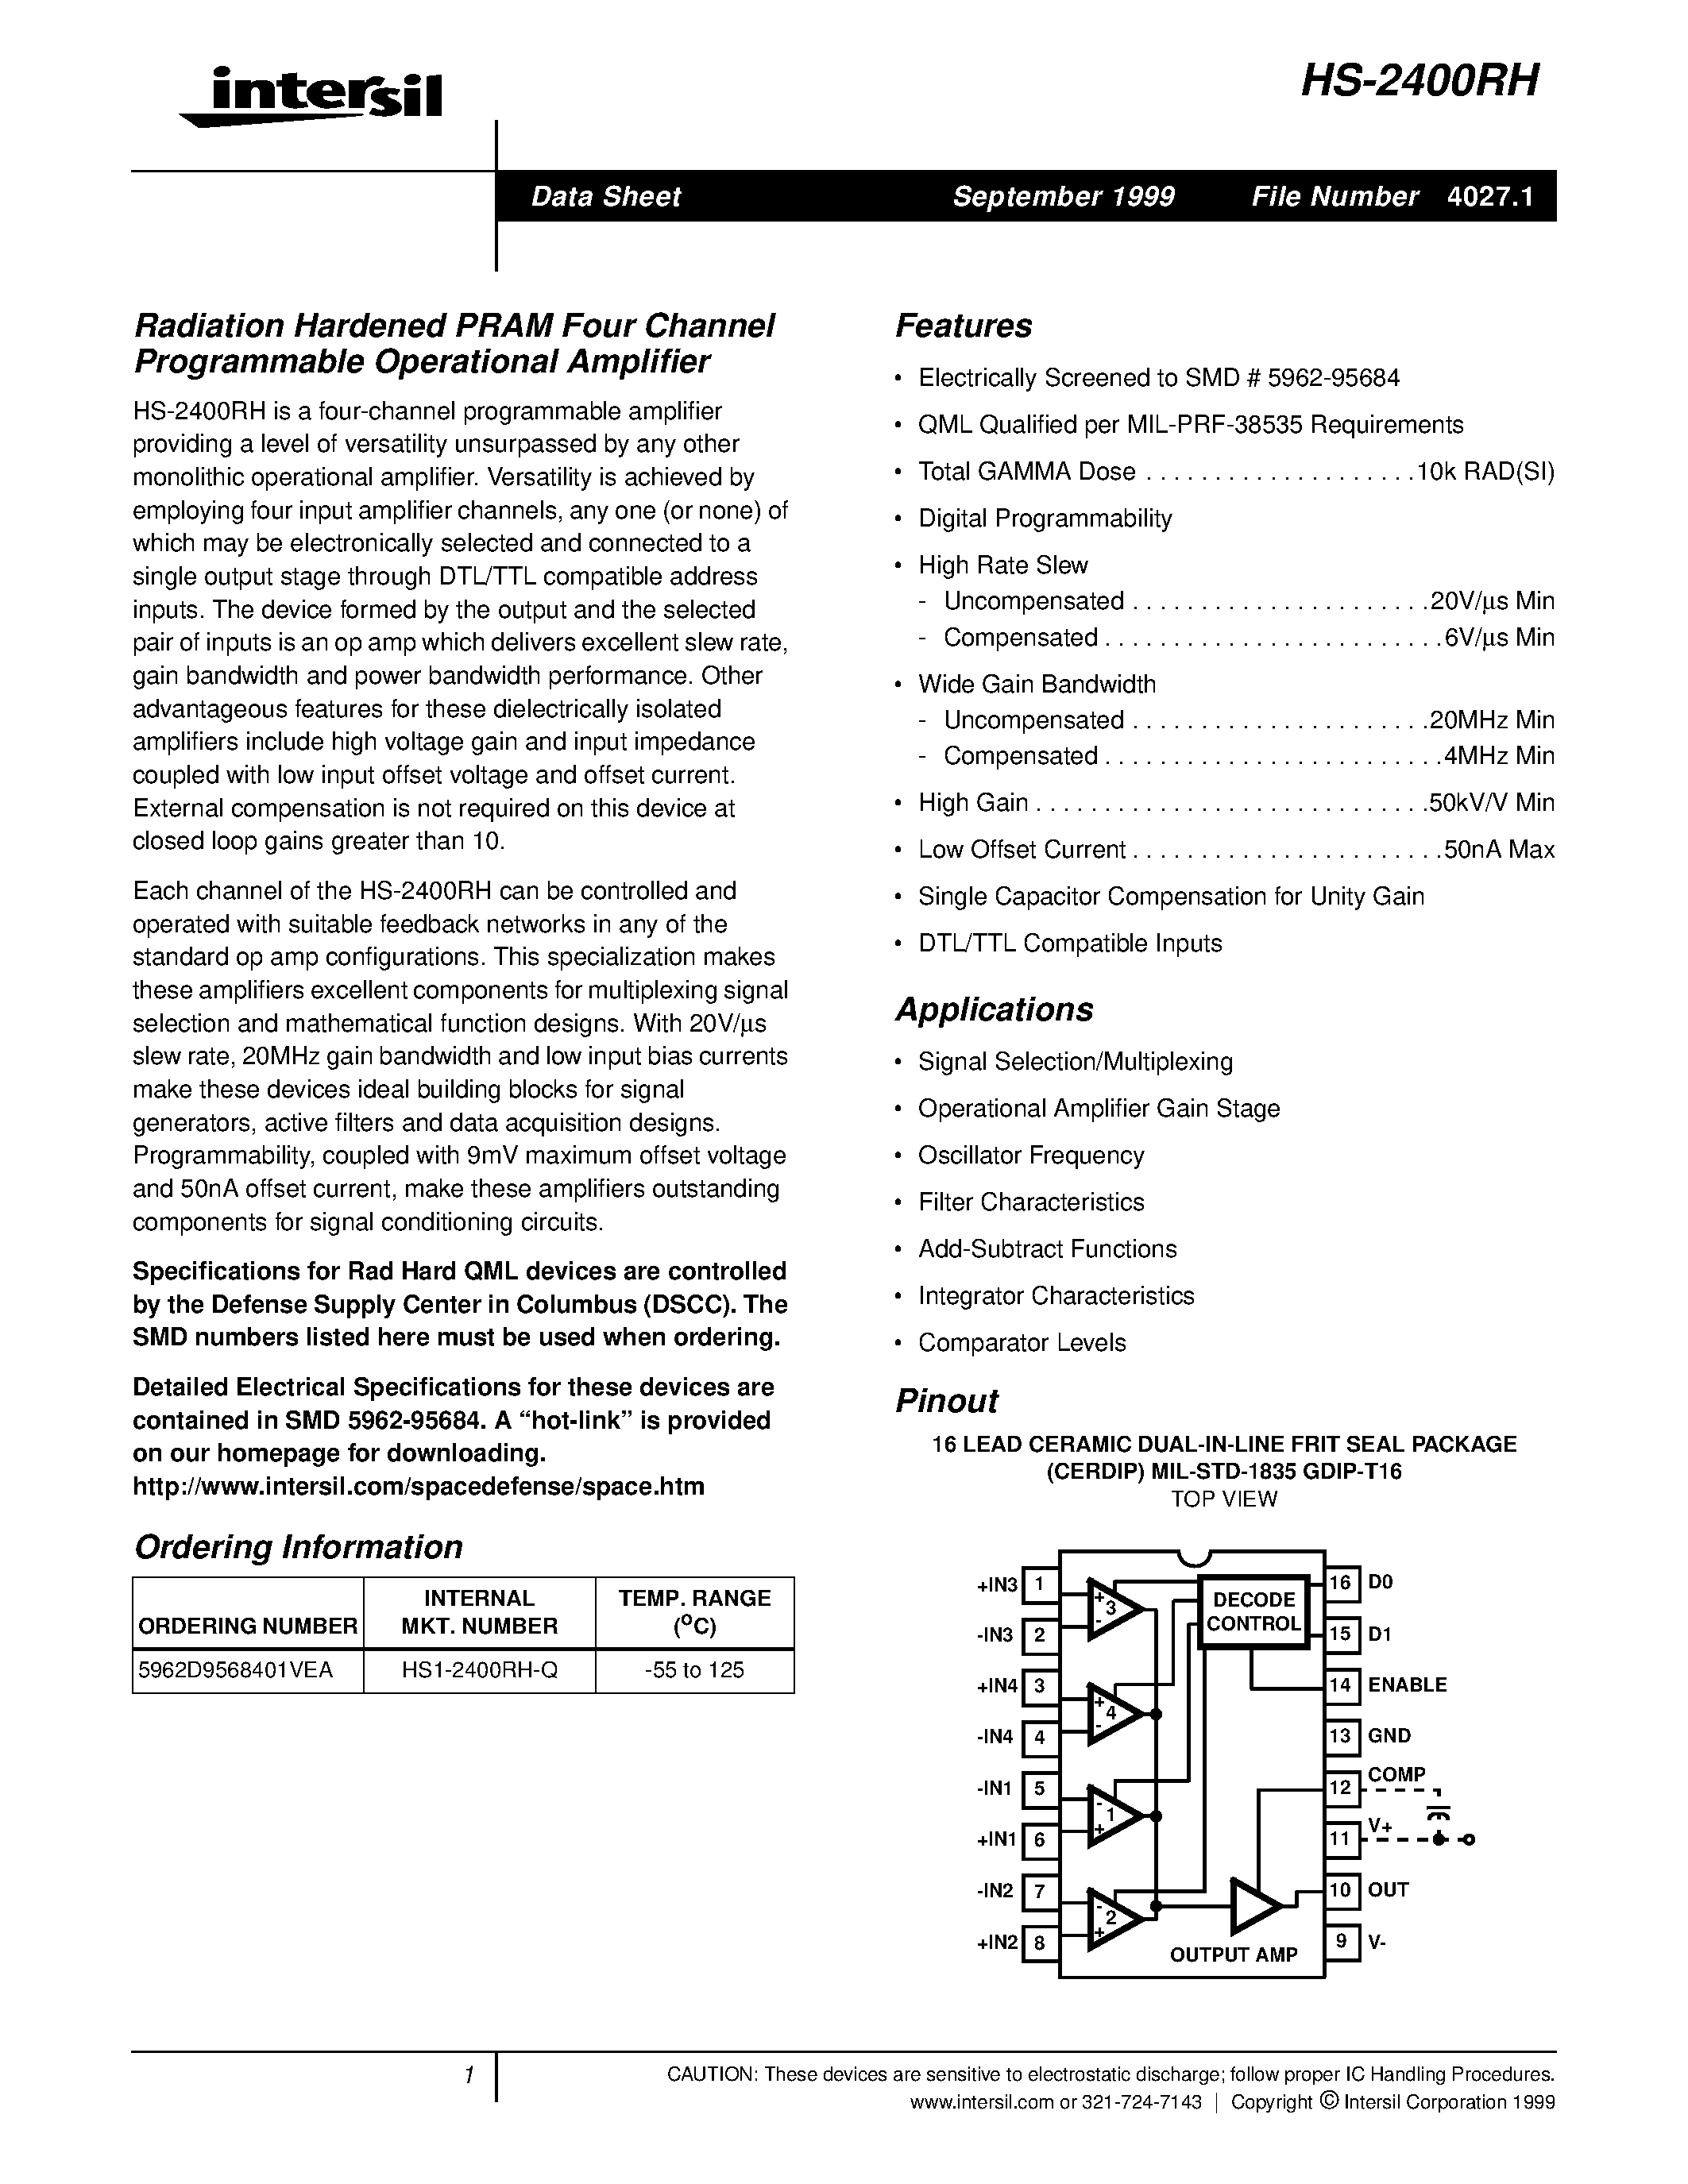 Даташит HS1-2400RH-Q - Radiation Hardened PRAM Four Channel Programmable Operational Amplifier страница 1